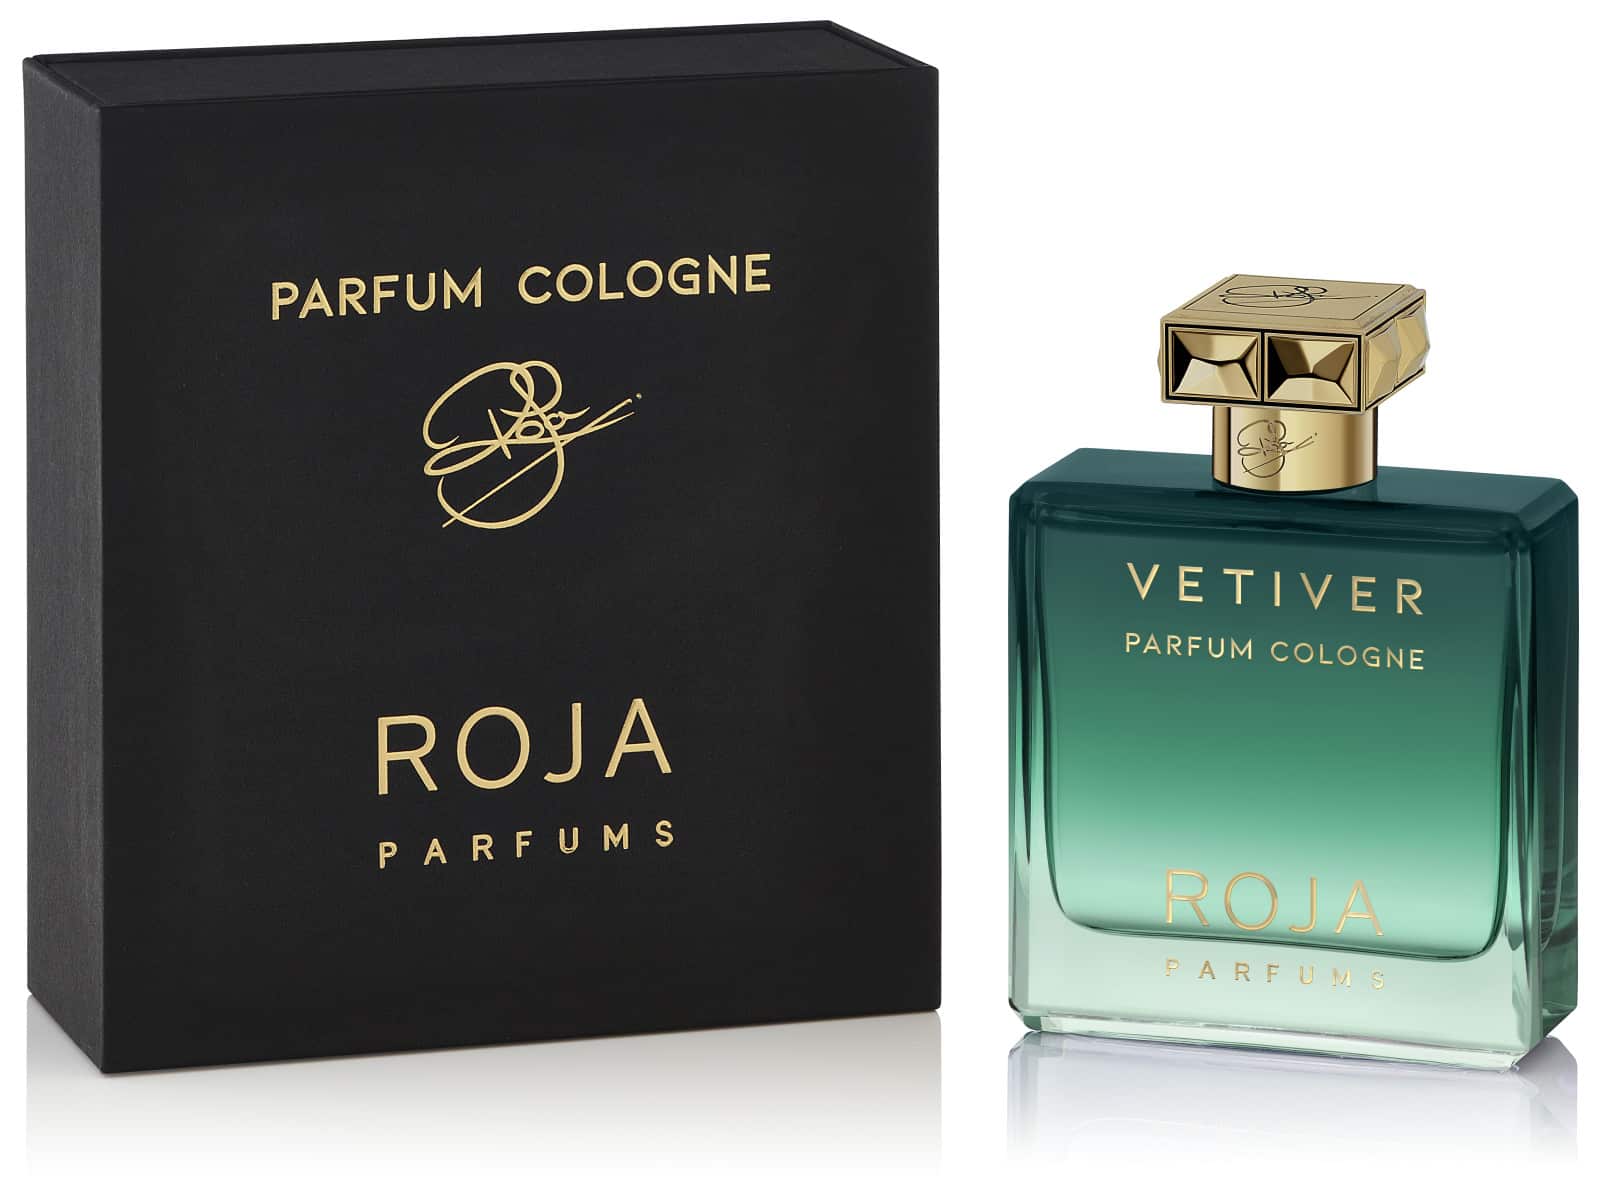 Vetiver Parfum Cologne